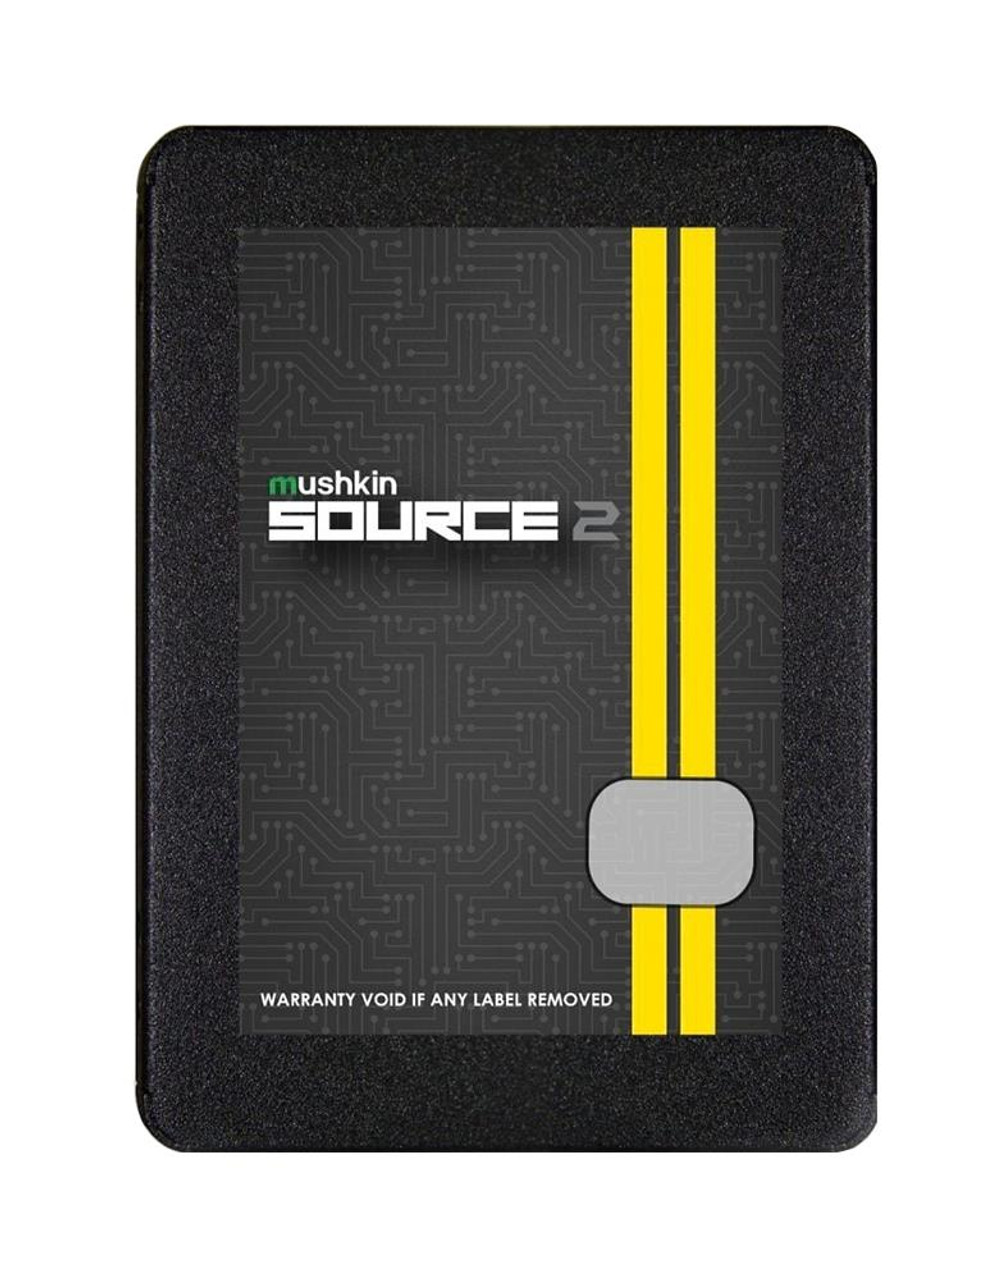 Mushkin SOURCE 2 240GB SATA 6Gbps 2.5-inch Internal Solid State Drive (SSD)